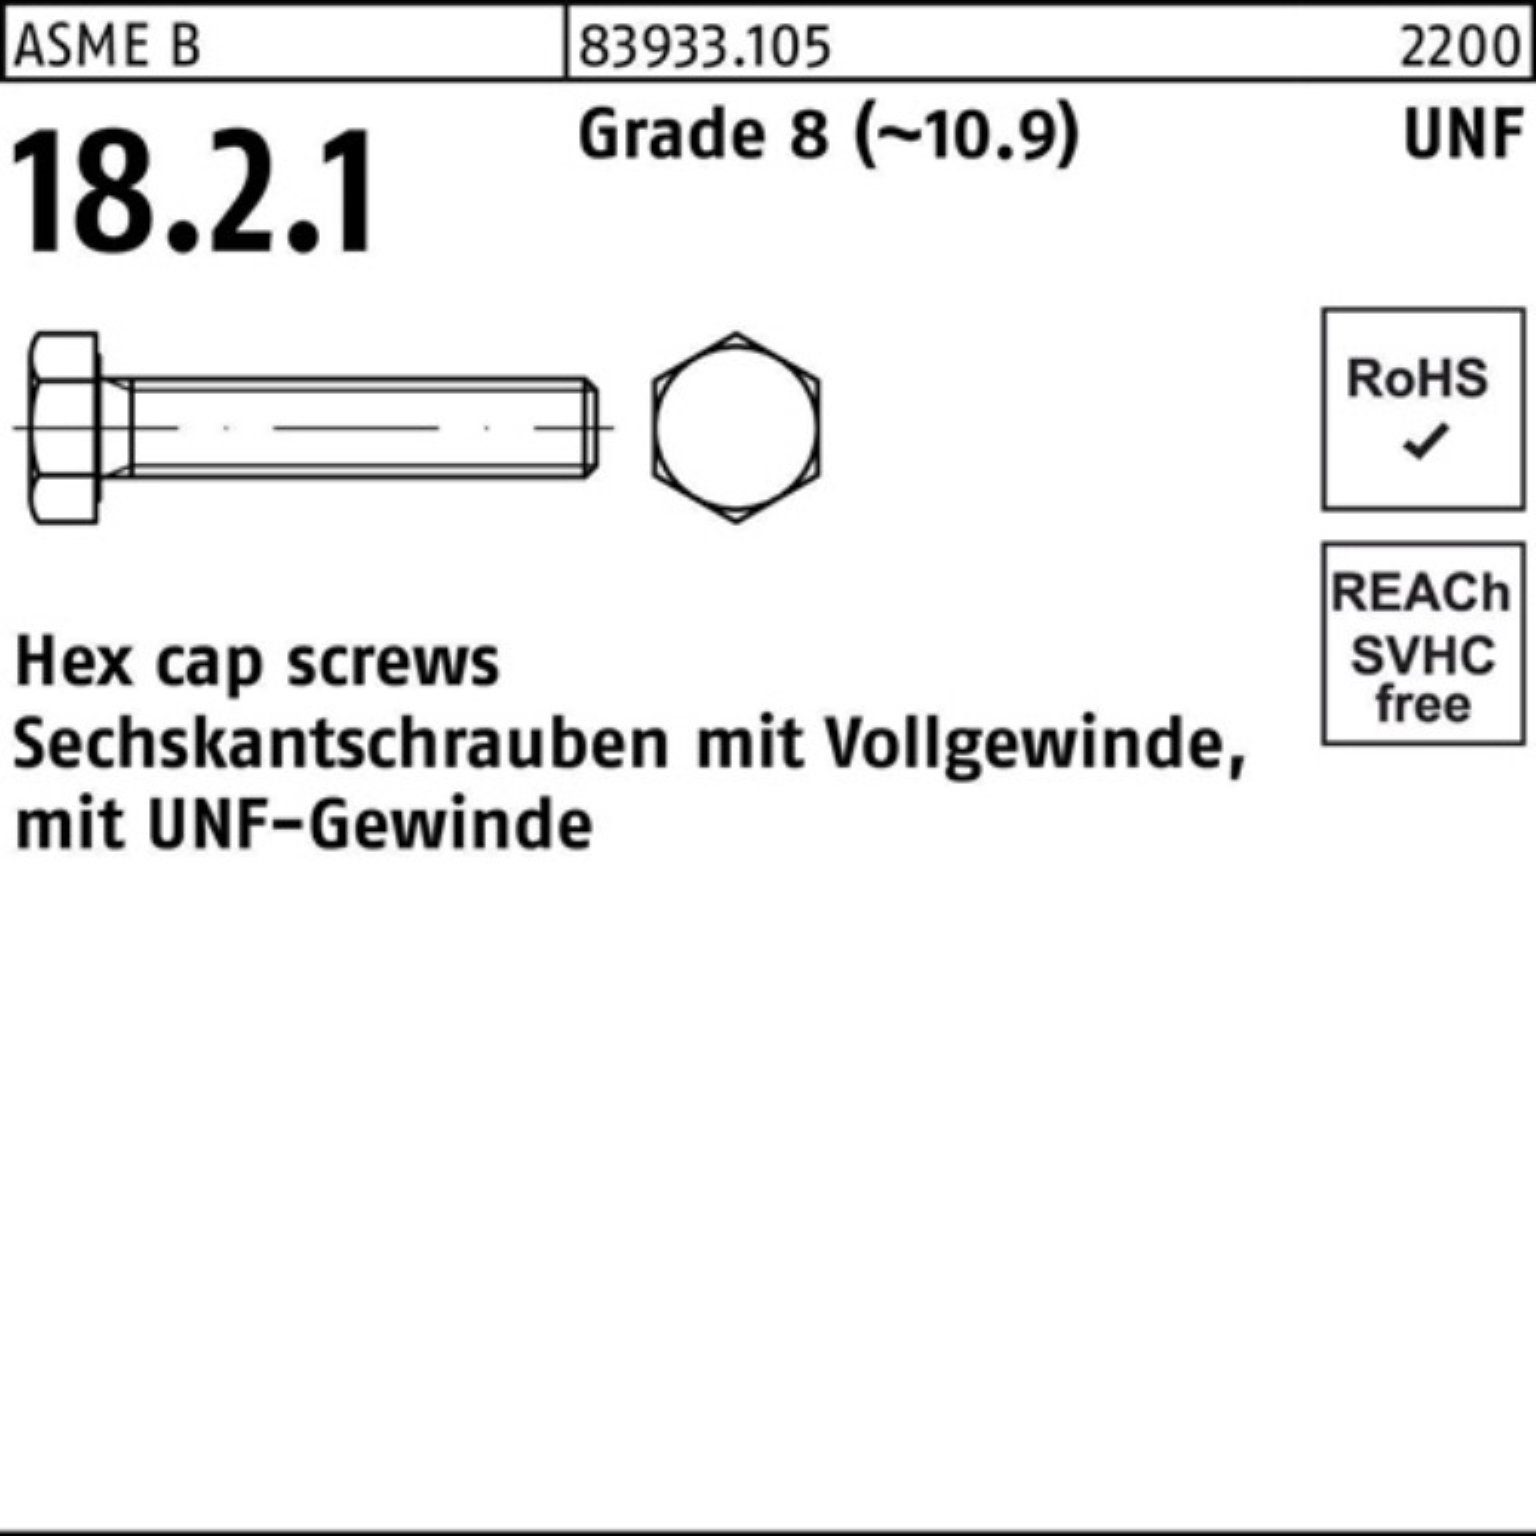 Reyher Sechskantschraube 100er Pack Sechskantschraube R 83933 UNF-Gewinde VG 1/2x 1 3/4 Grade 8